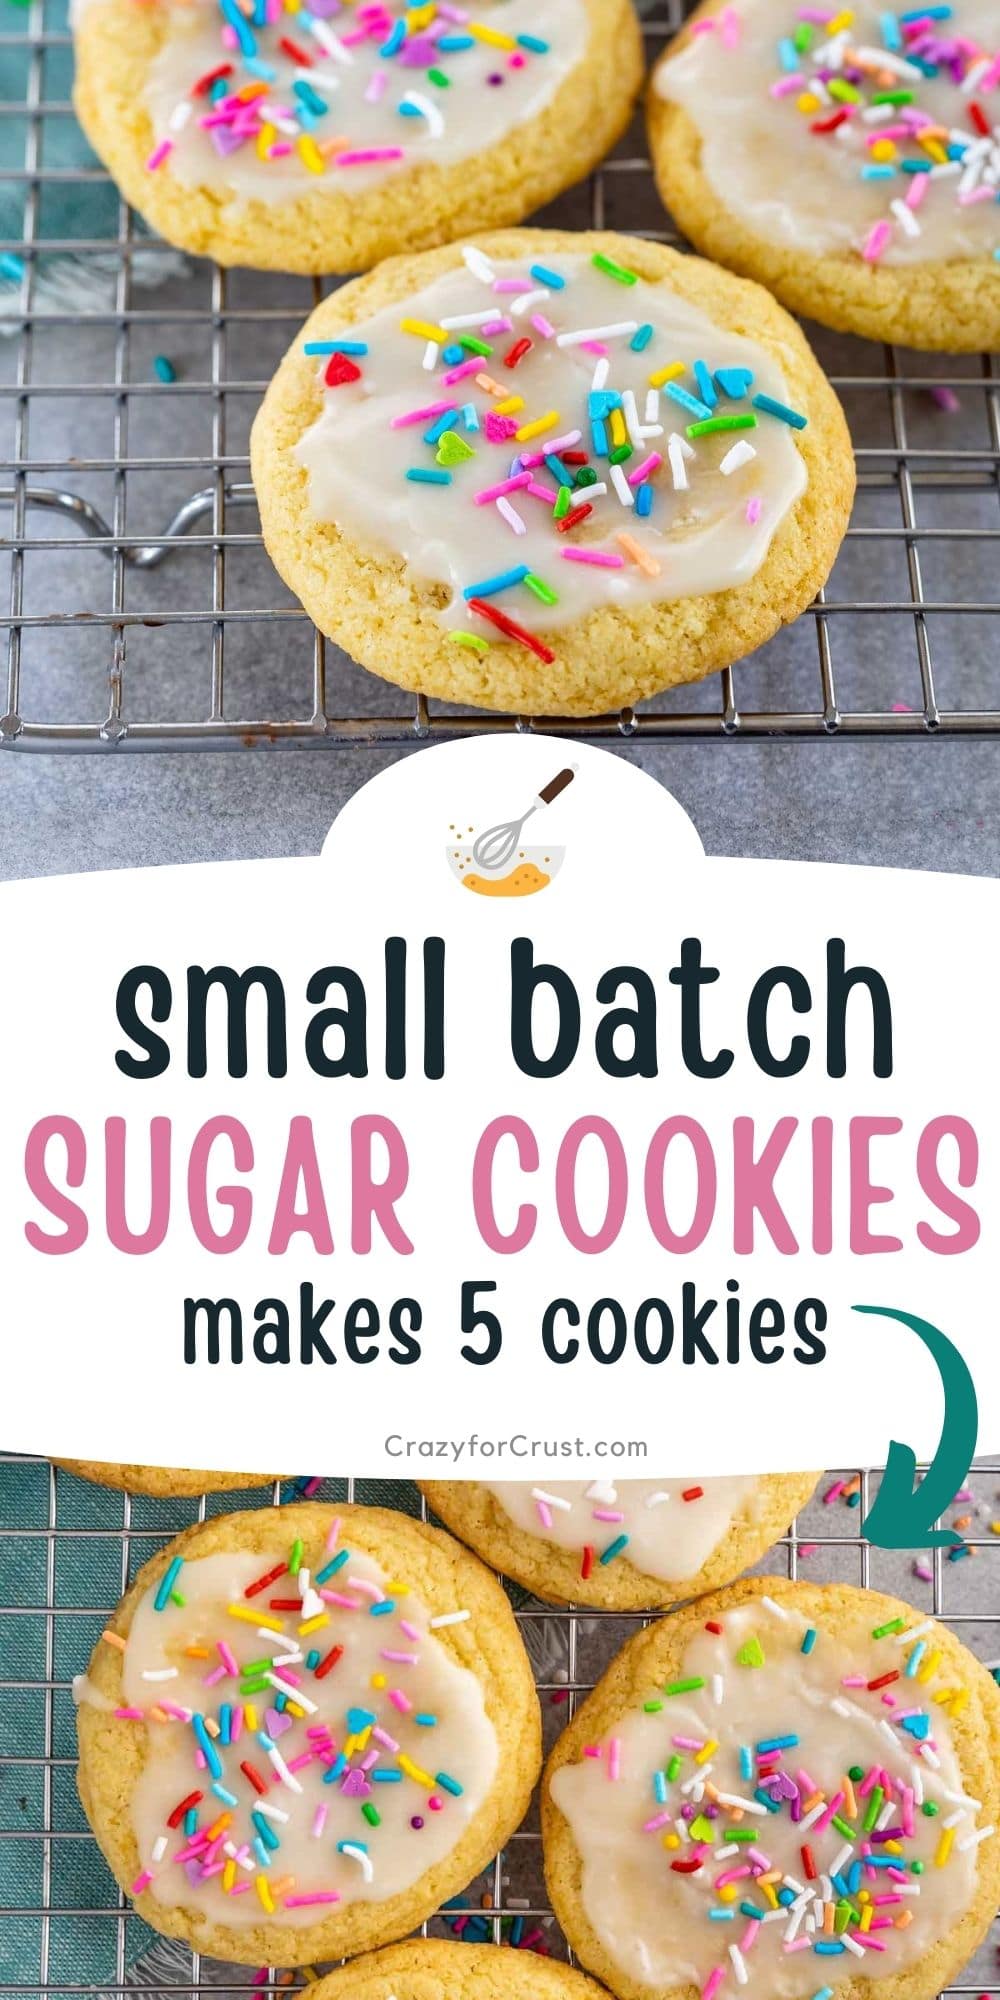 https://www.crazyforcrust.com/wp-content/uploads/2021/04/small-batch-sugar-cookies-recipe.jpg